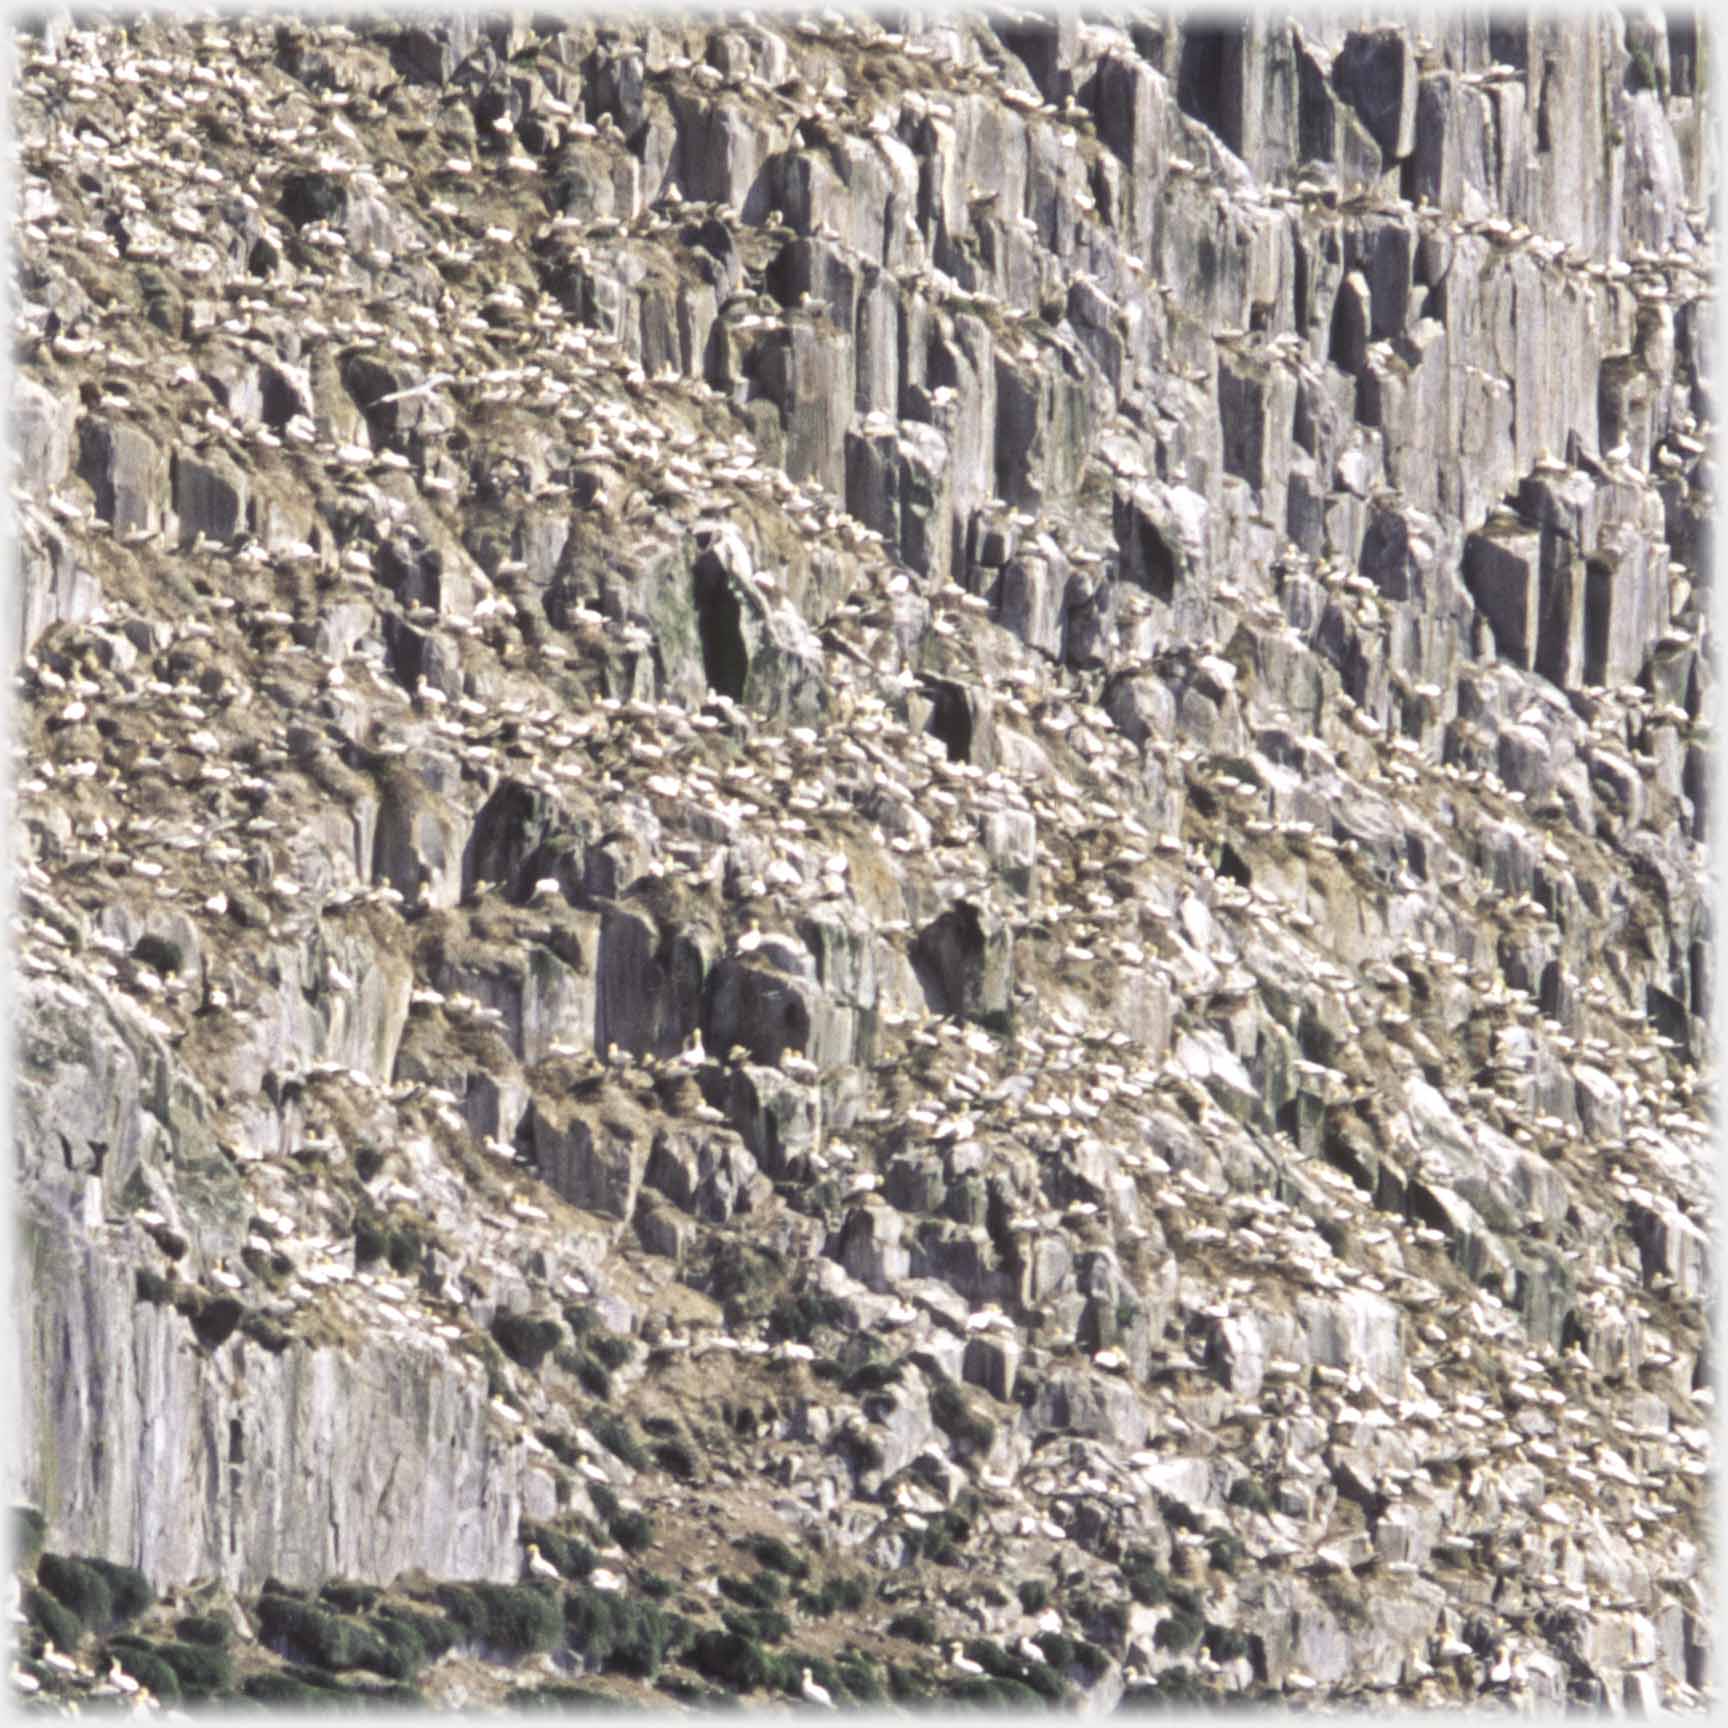 Closer shot of nesting area on cliffs.